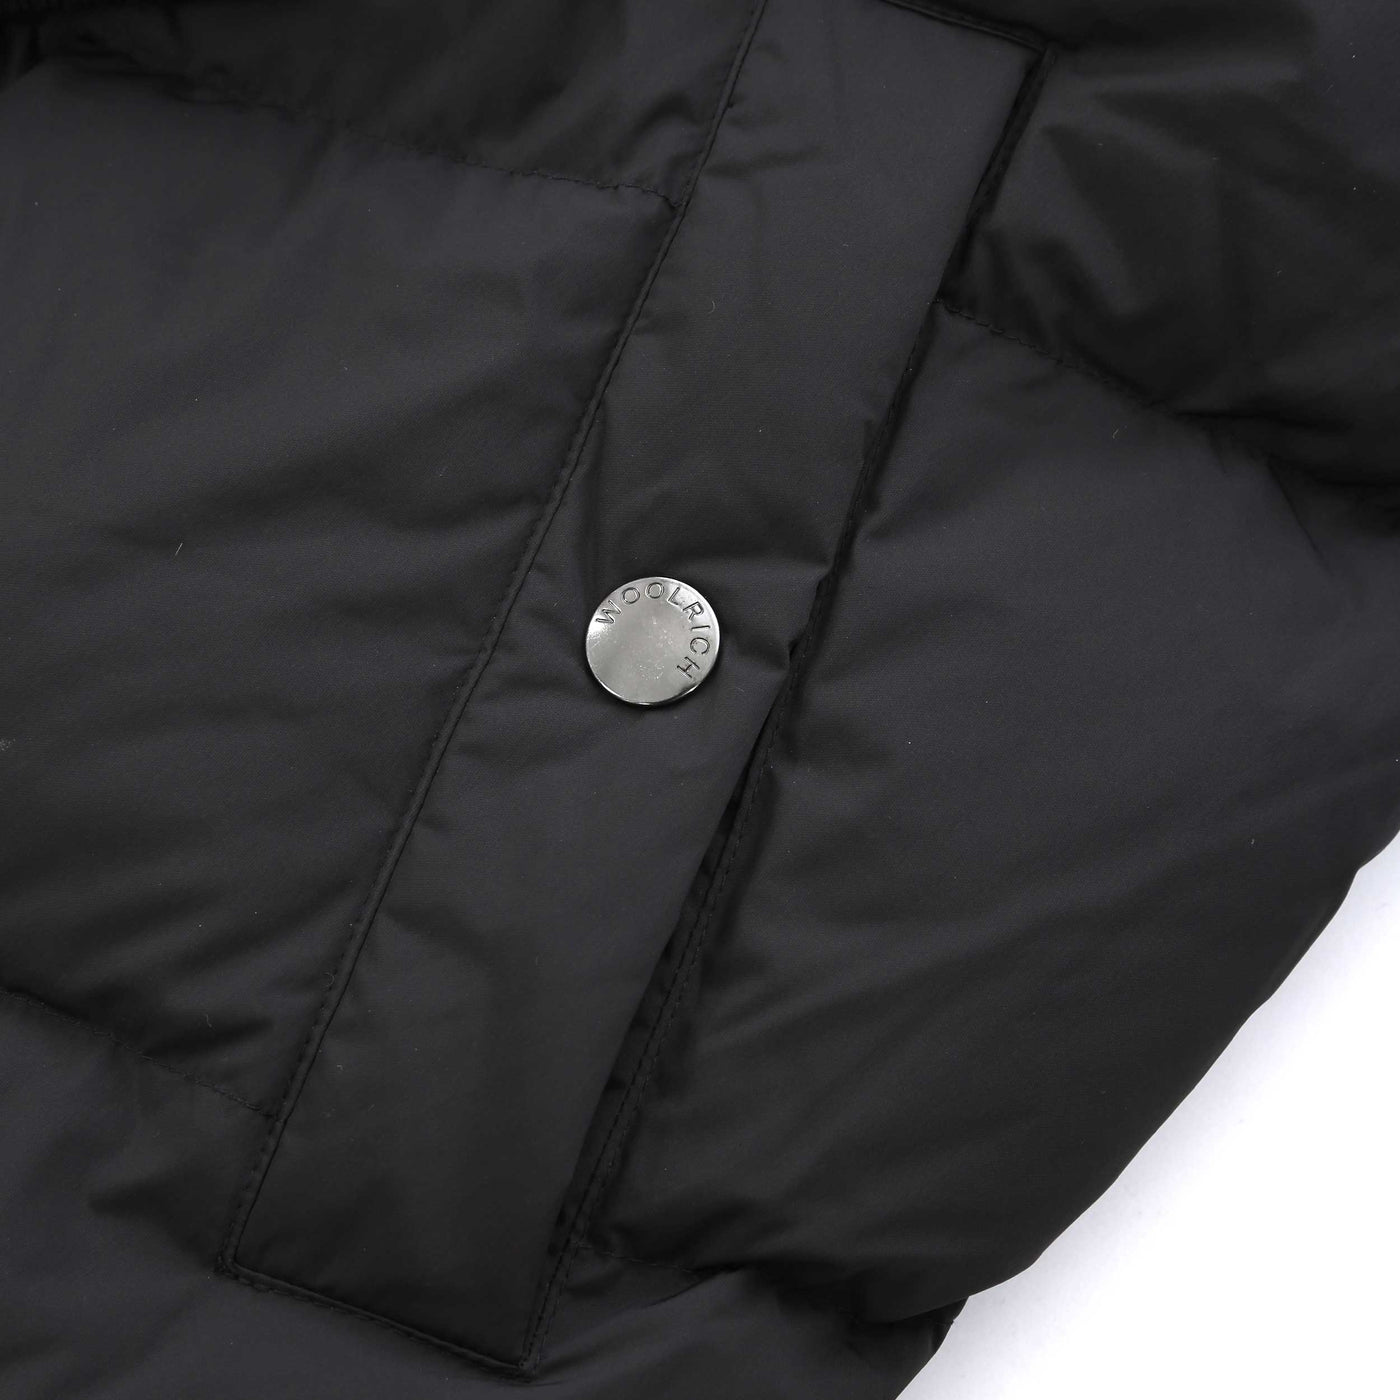 Woolrich Premium Down Jacket in Black Pocket